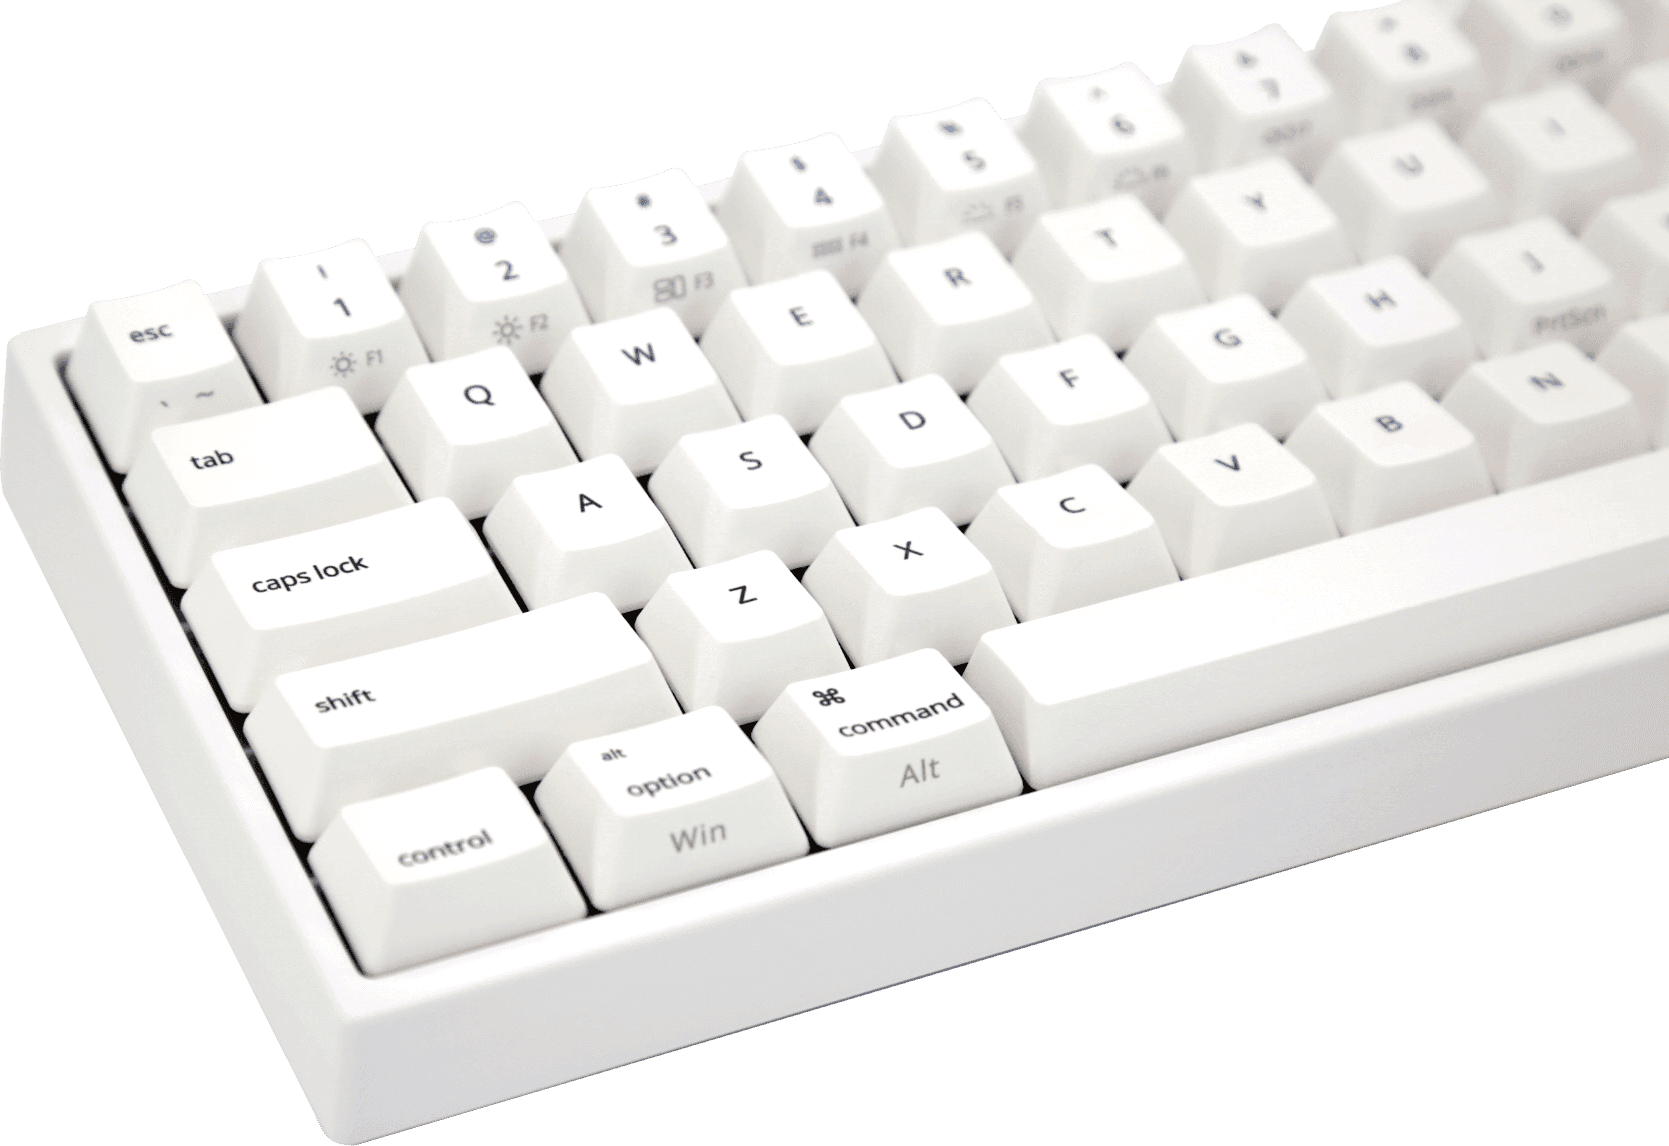 Ducky Miya Pro Mac Mechanical Keyboard with Cherry MX Brown Key Switches